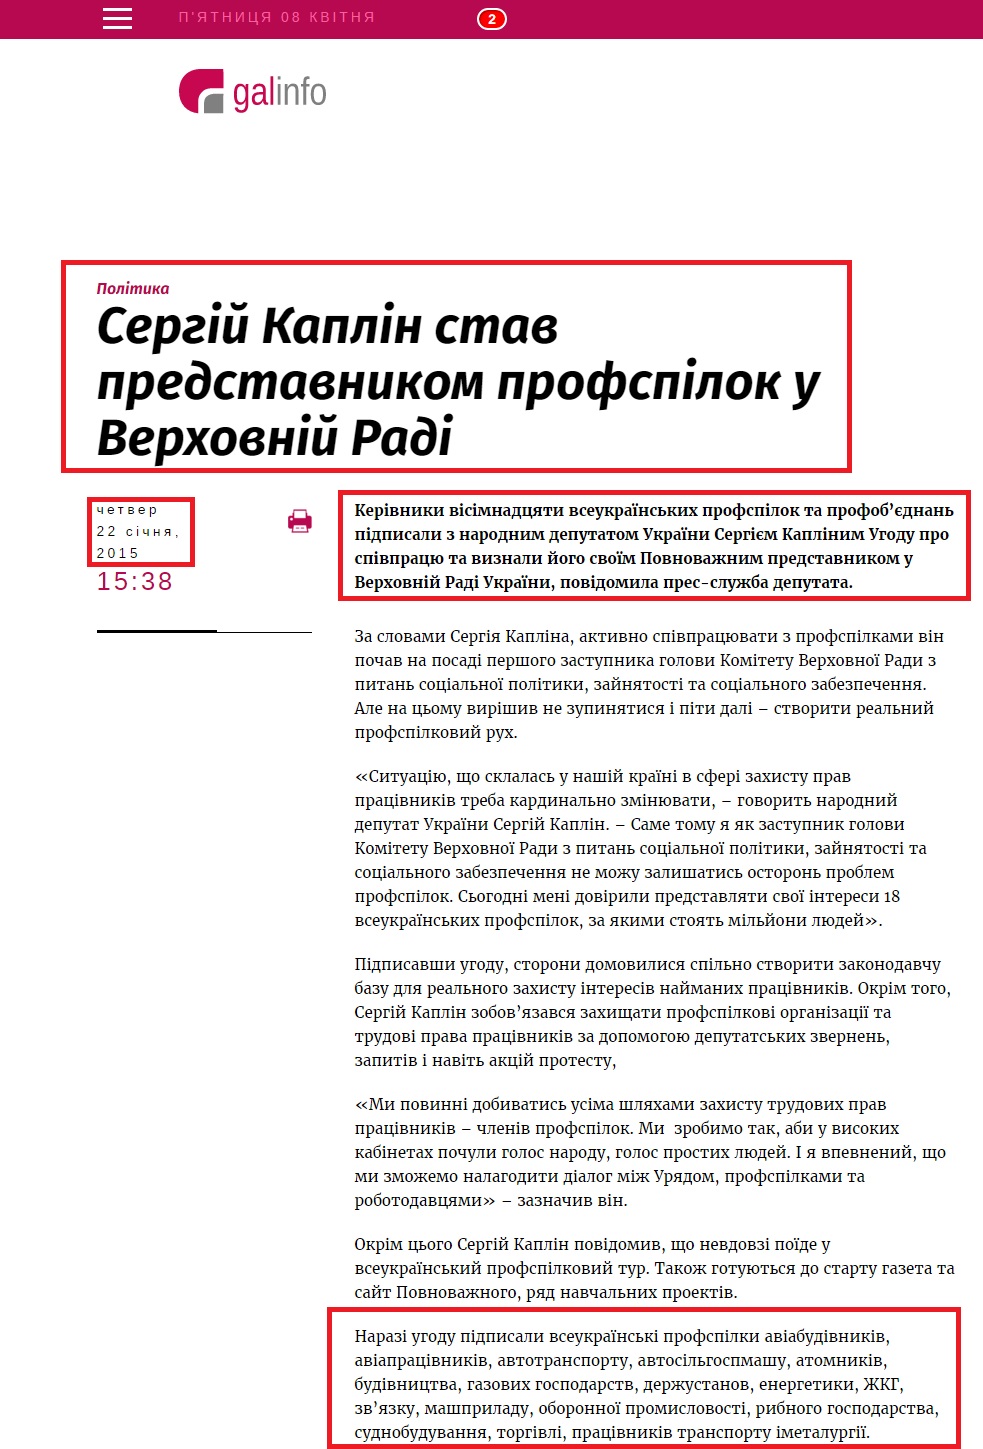 http://galinfo.com.ua/news/sergiy_kaplin_stav_predstavnykom_profspilok_u_verhovniy_radi_182771.html